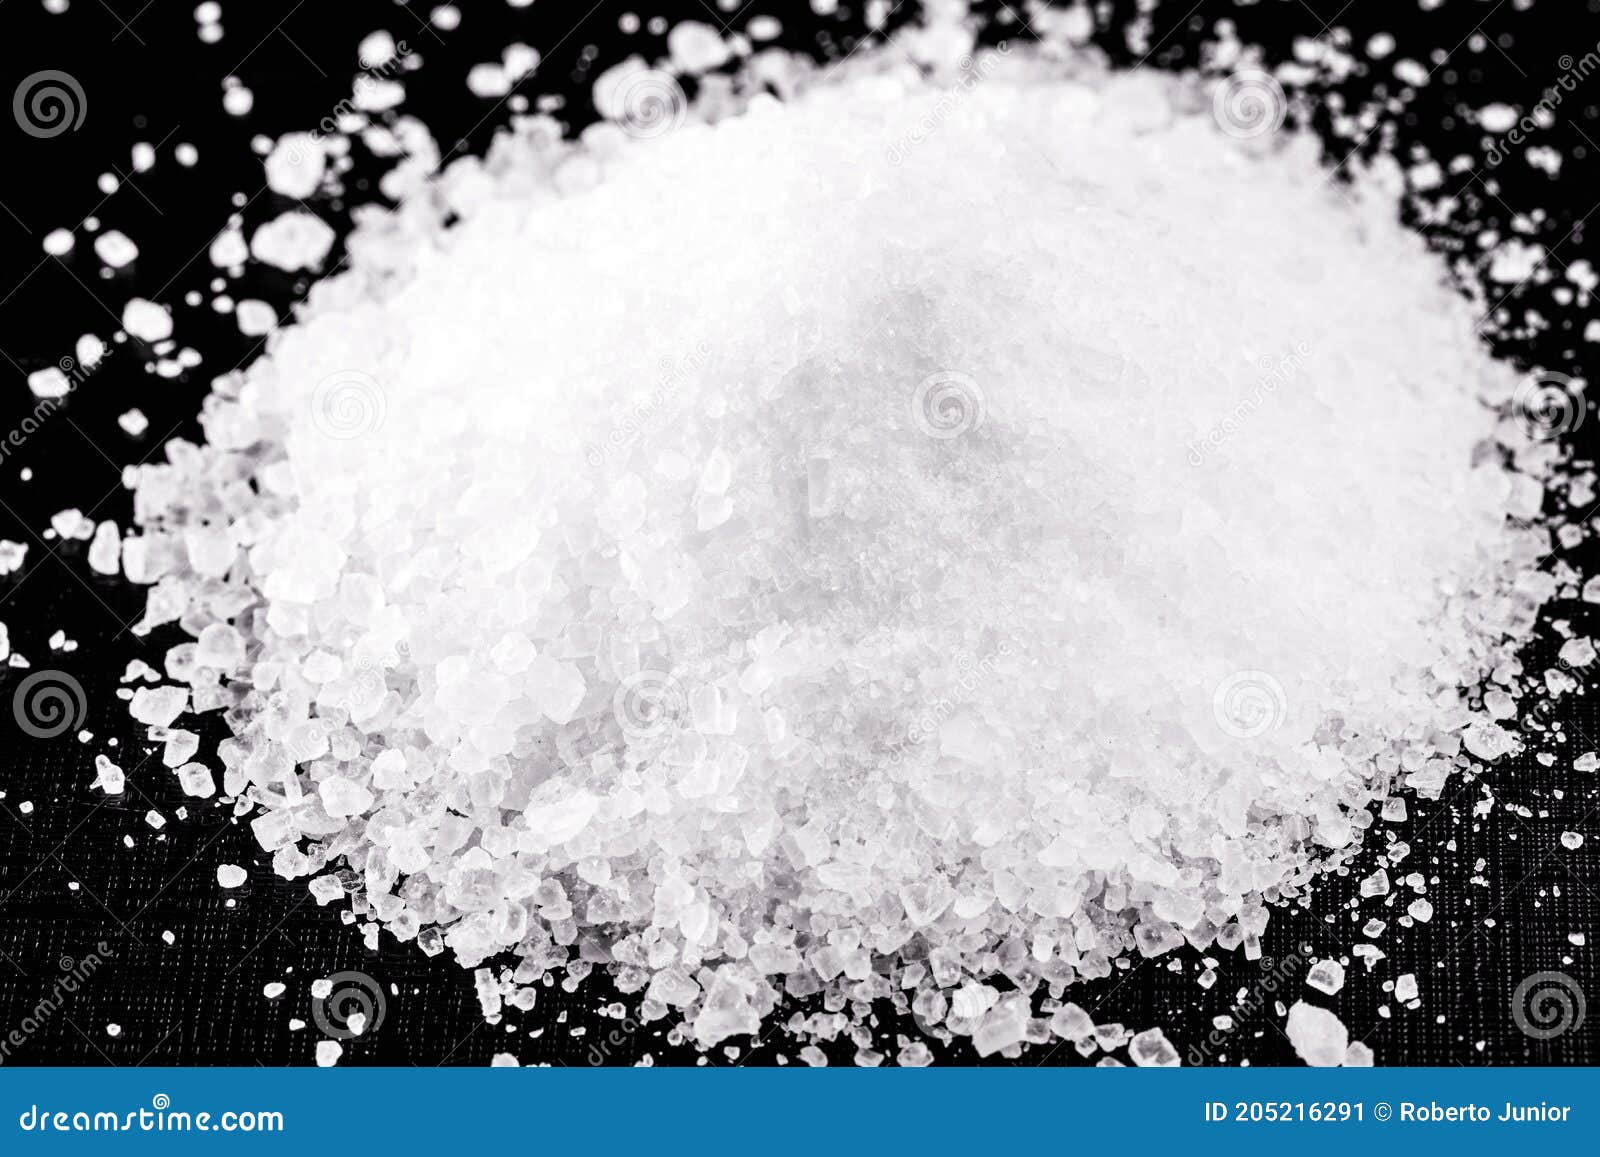 Mallinkrodt Potassium Cyanide 1 pound Pure Granulated Empty